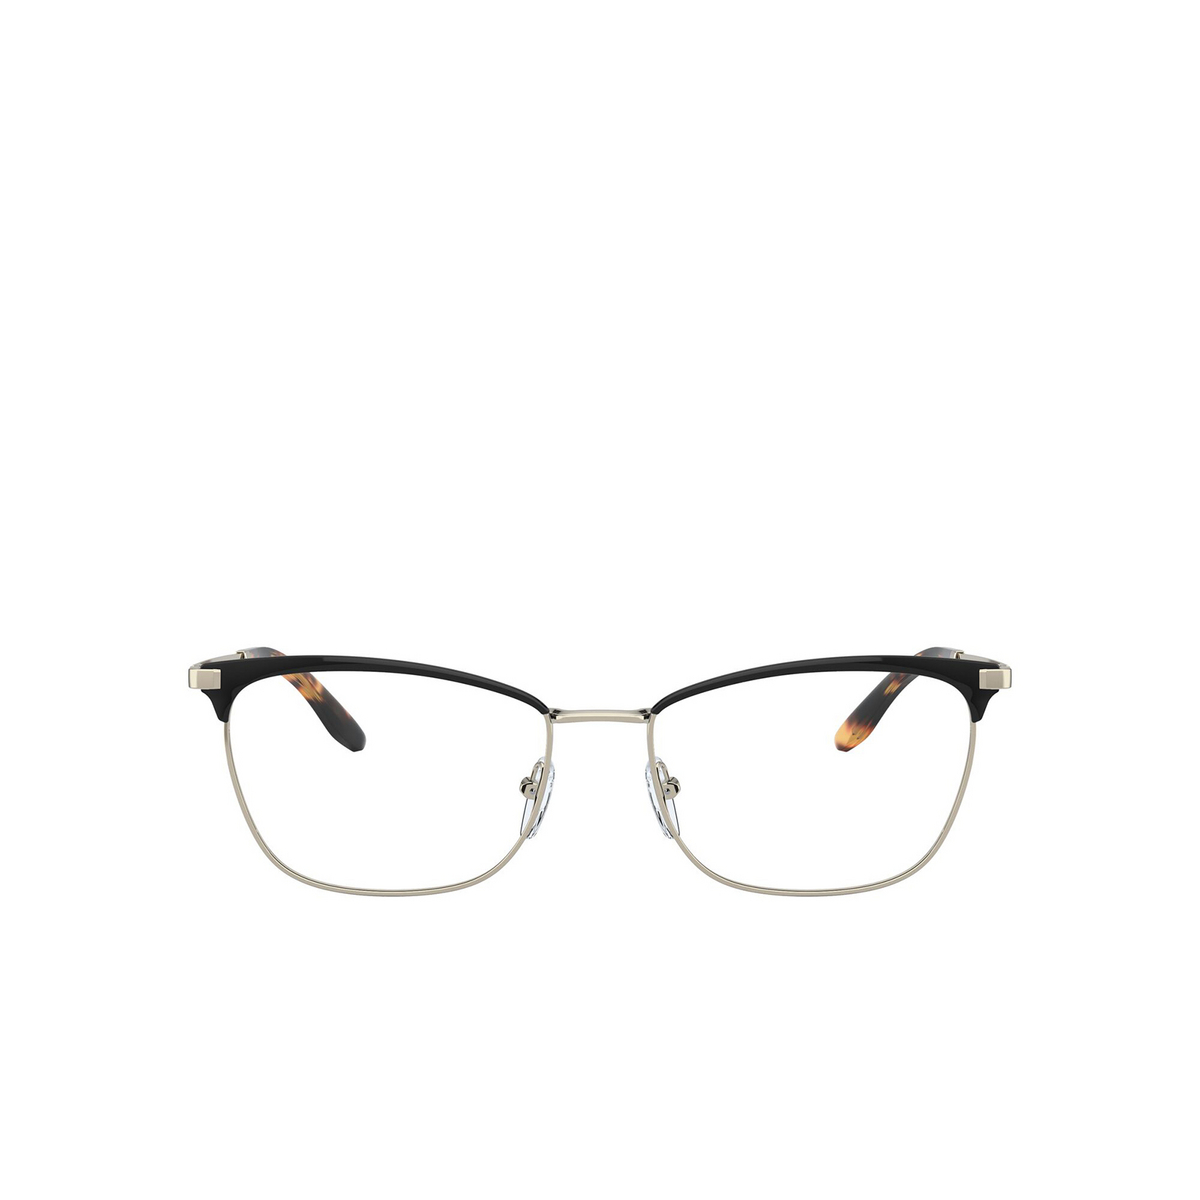 Prada® Irregular Eyeglasses: PR 57WV color Black / Pale Gold AAV1O1 - front view.